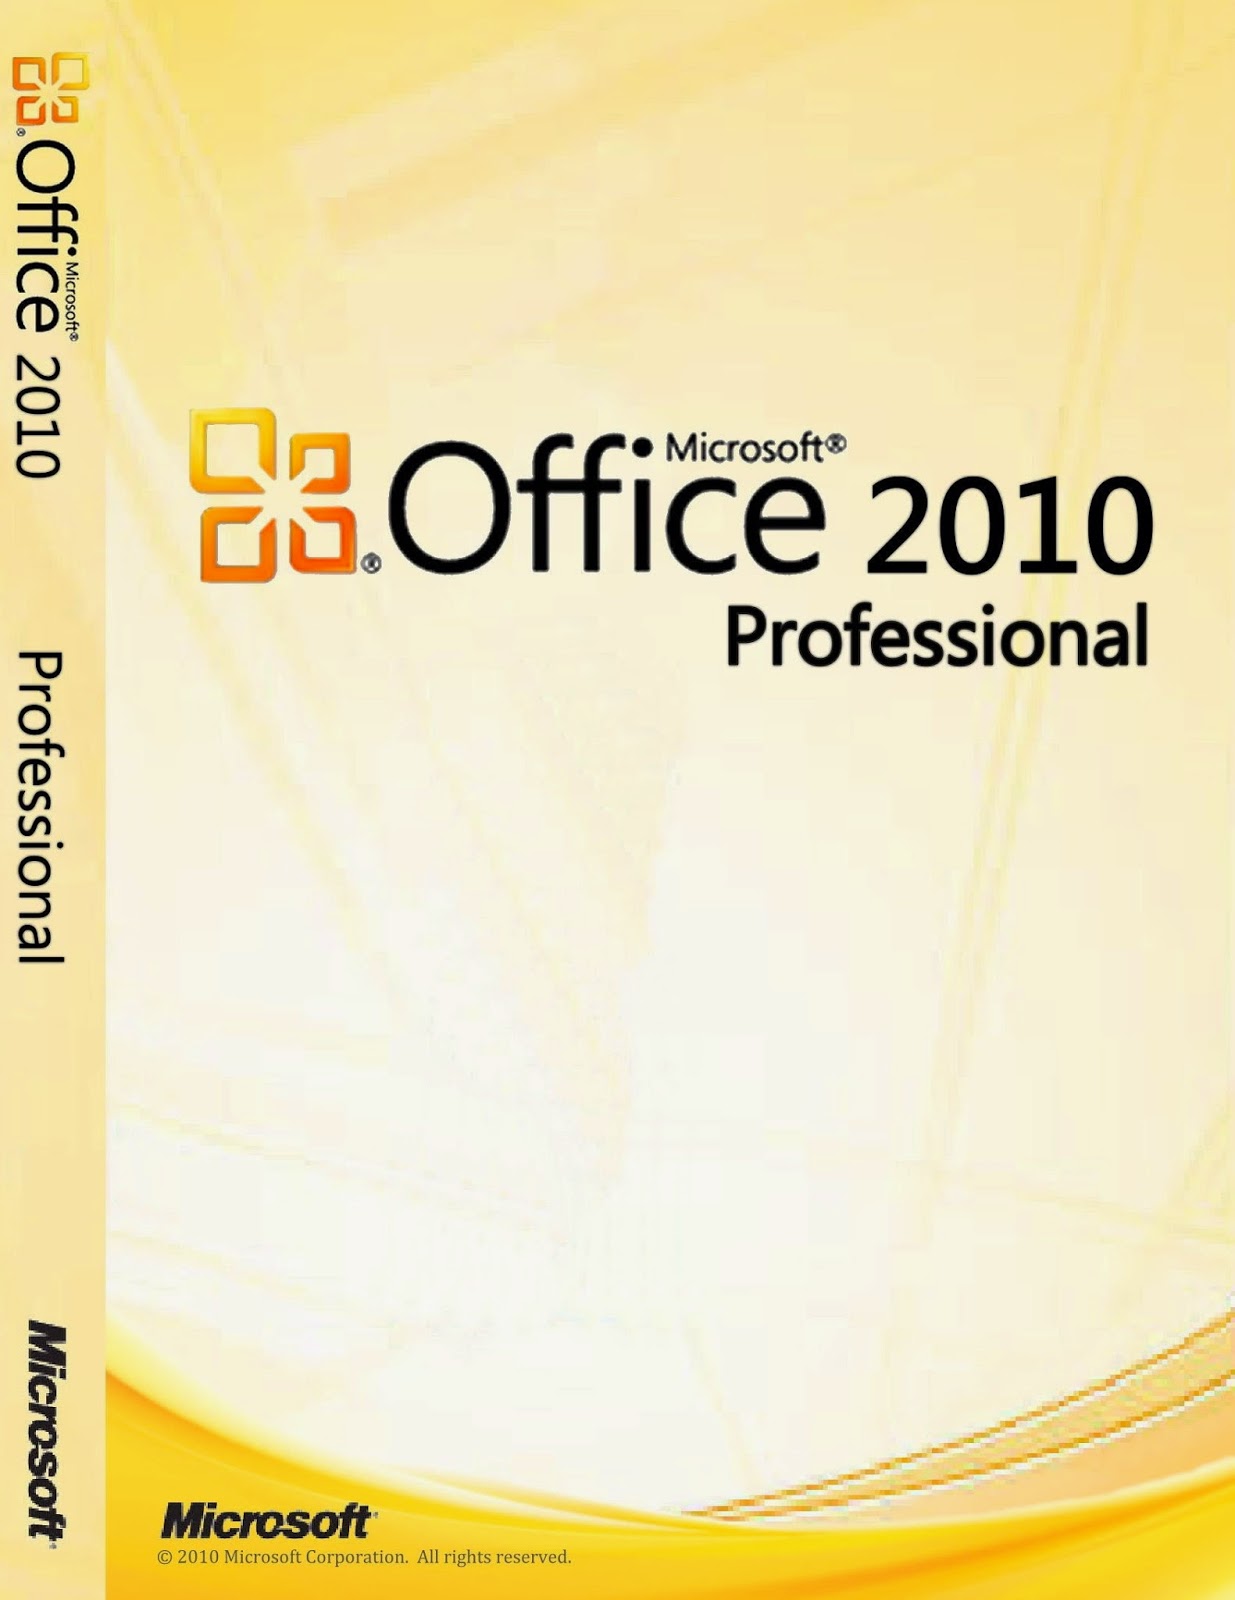 Office 2010 x64. Microsoft Office 2010 Pro Plus. Microsoft Office professional Plus 2010. Microsoft Office 2010 professional. МС офис 2010.